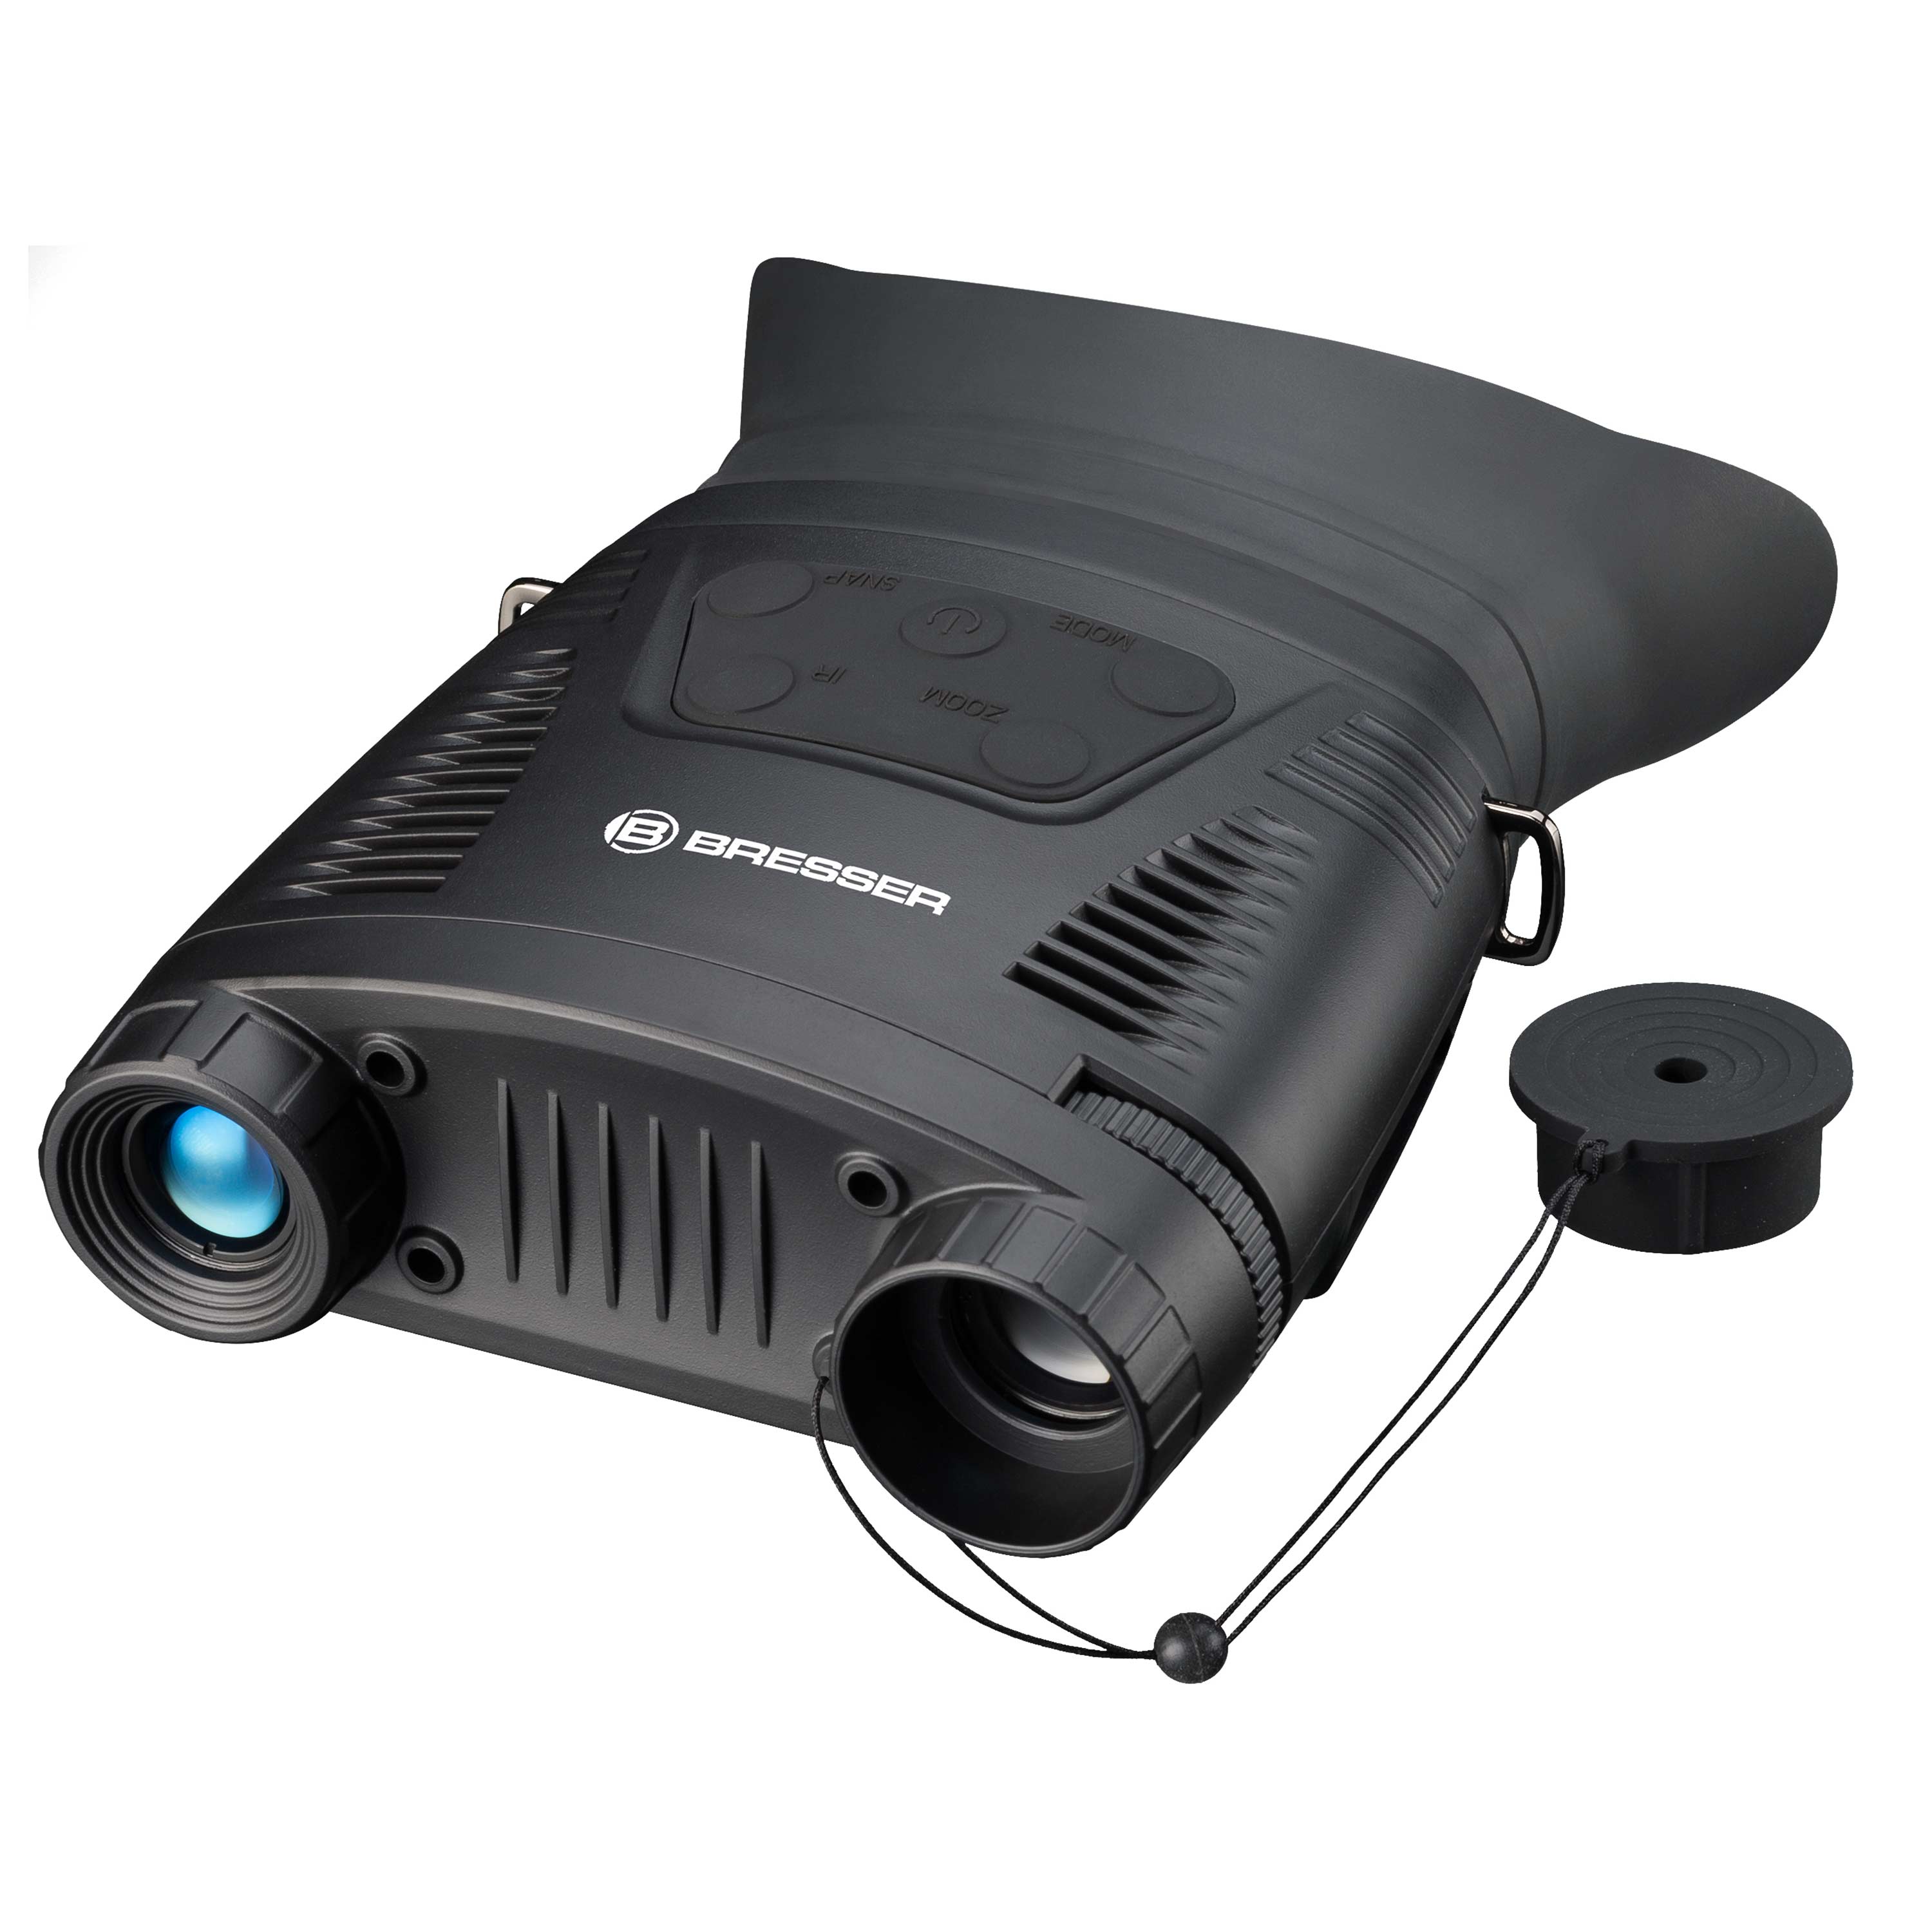 Purchase the Bresser Recording Digital Binocular 3.5x Night Visi